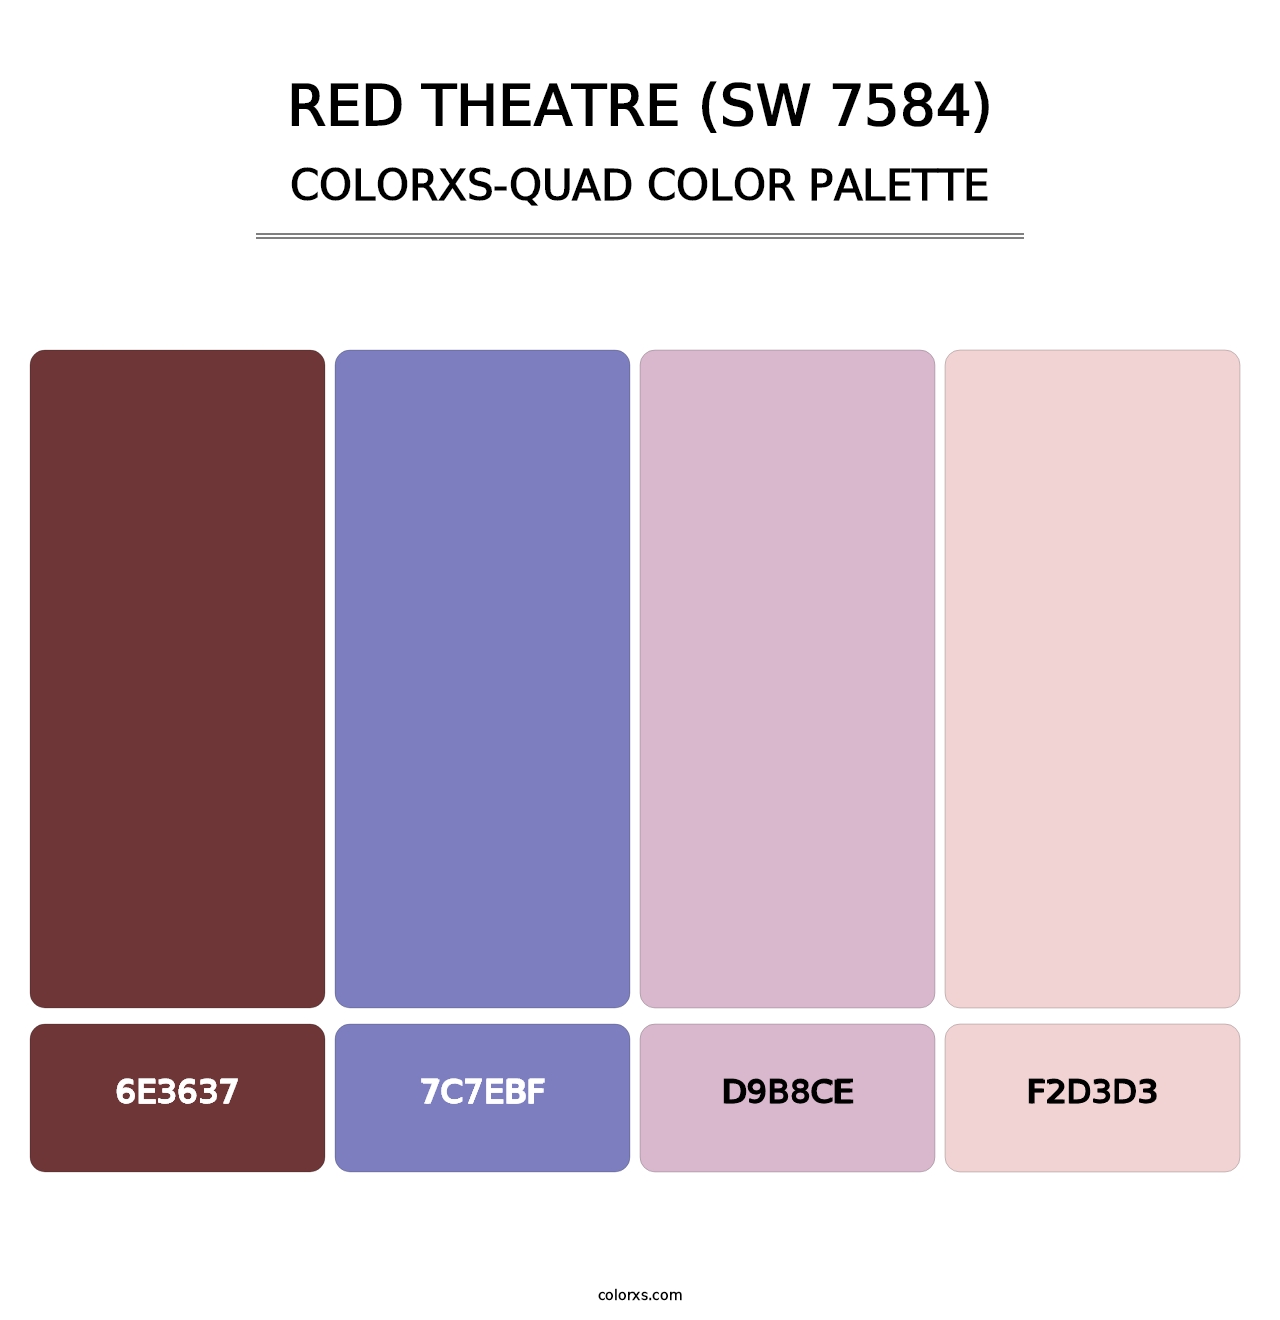 Red Theatre (SW 7584) - Colorxs Quad Palette